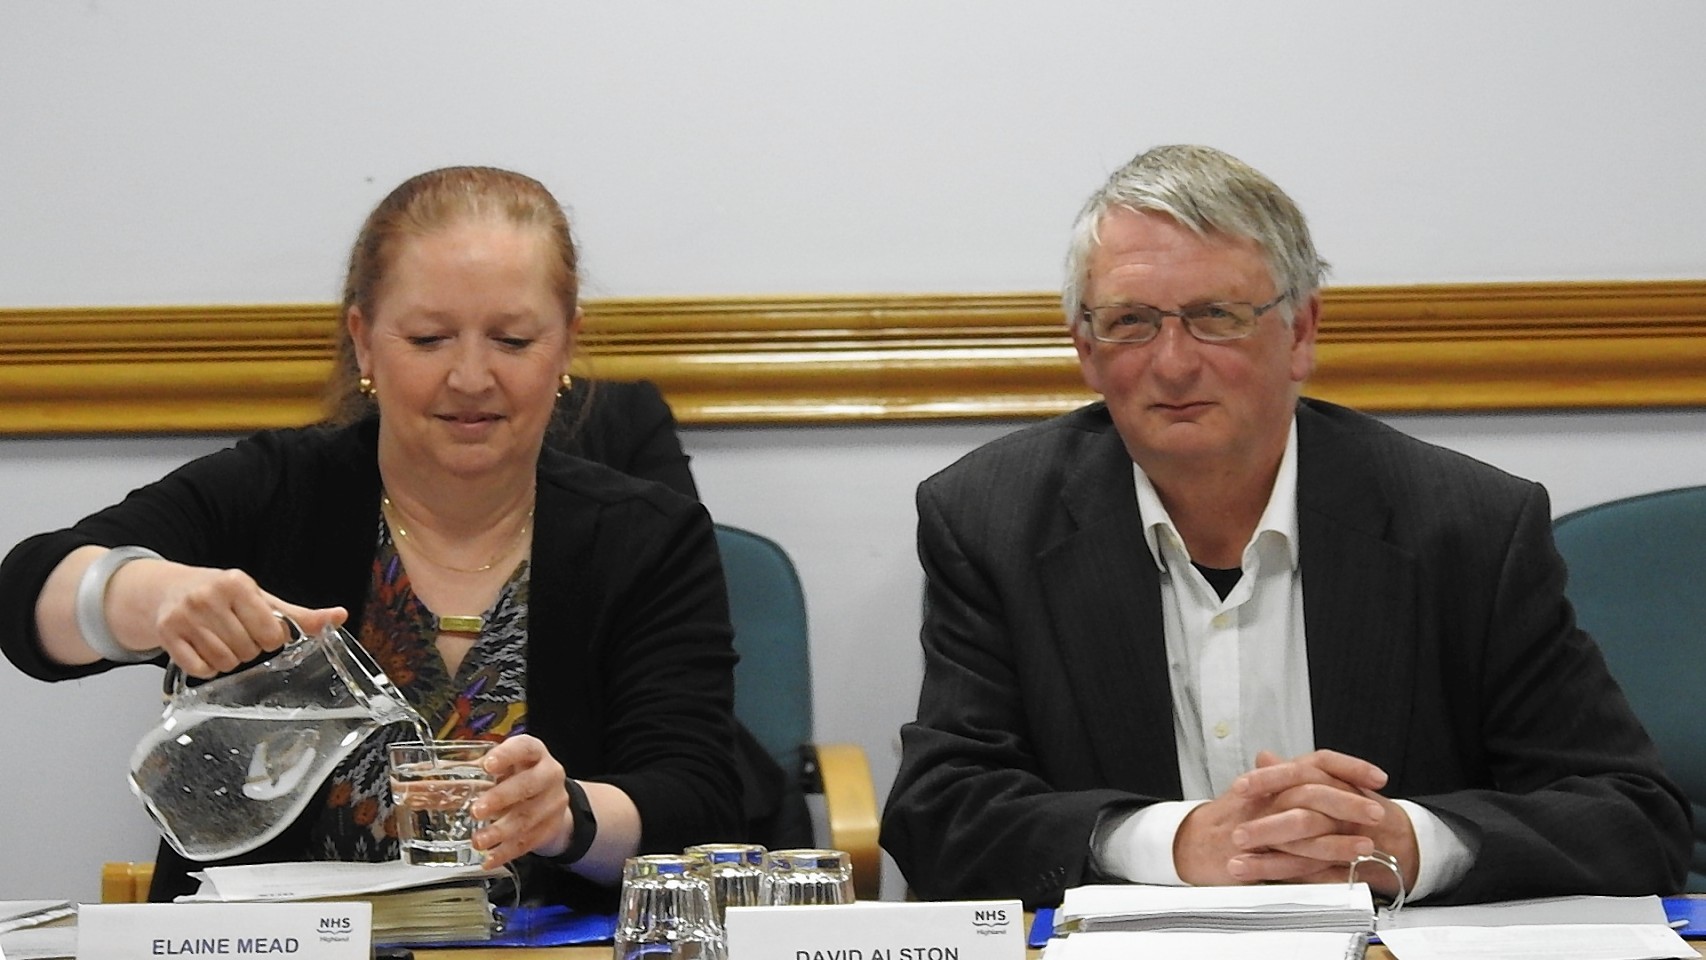 NHS Highland chairman David Alston, alongside chief executive Elaine Mead.